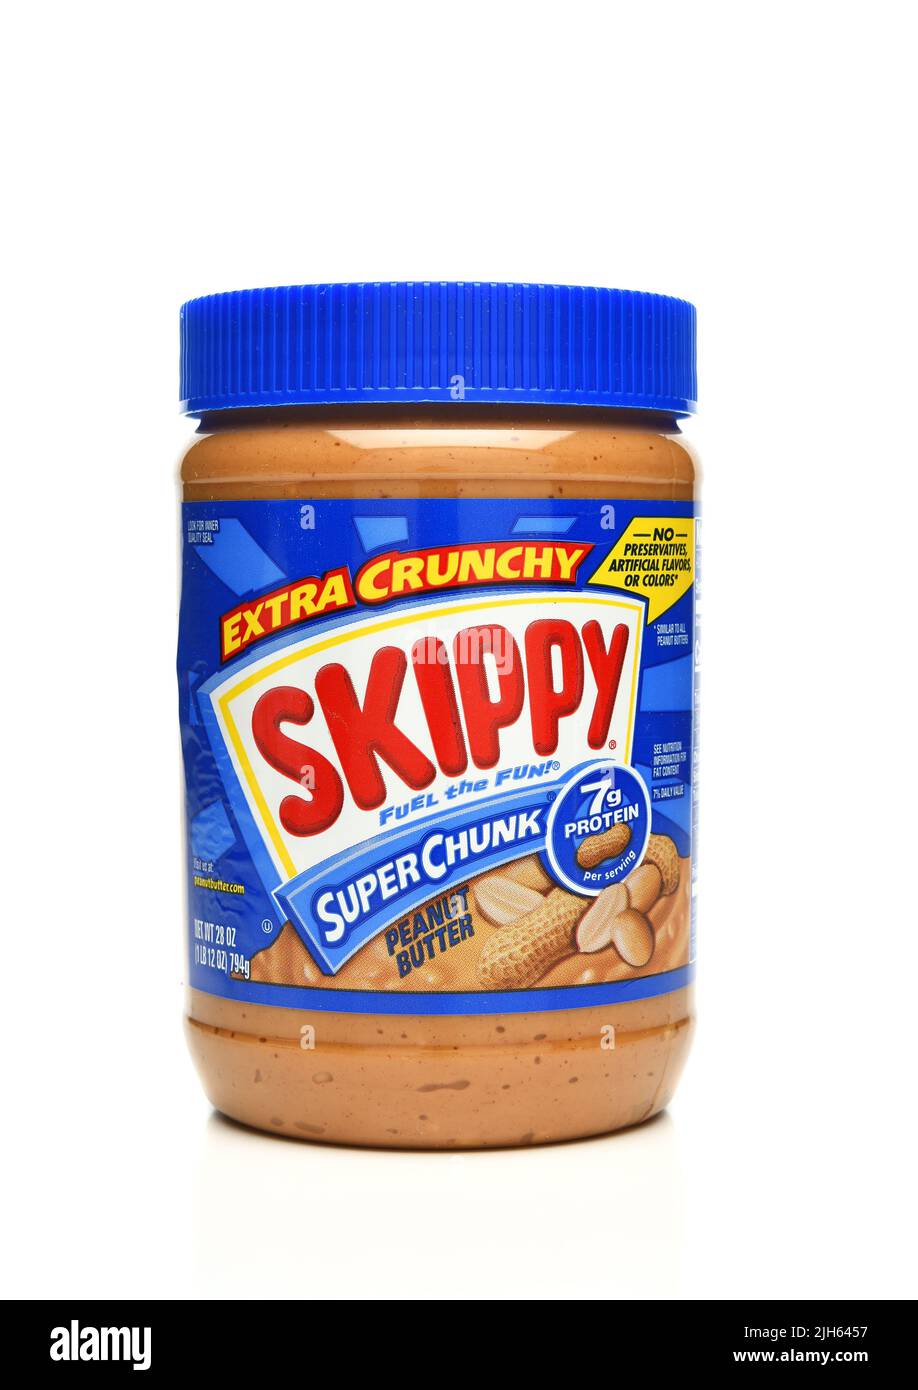 IRVINE, CALIFORNIA - 15 DE JULIO de 2022: Un tarro de Skippy Extra Crunch Super Chunk Mantequilla de cacahuete. Foto de stock